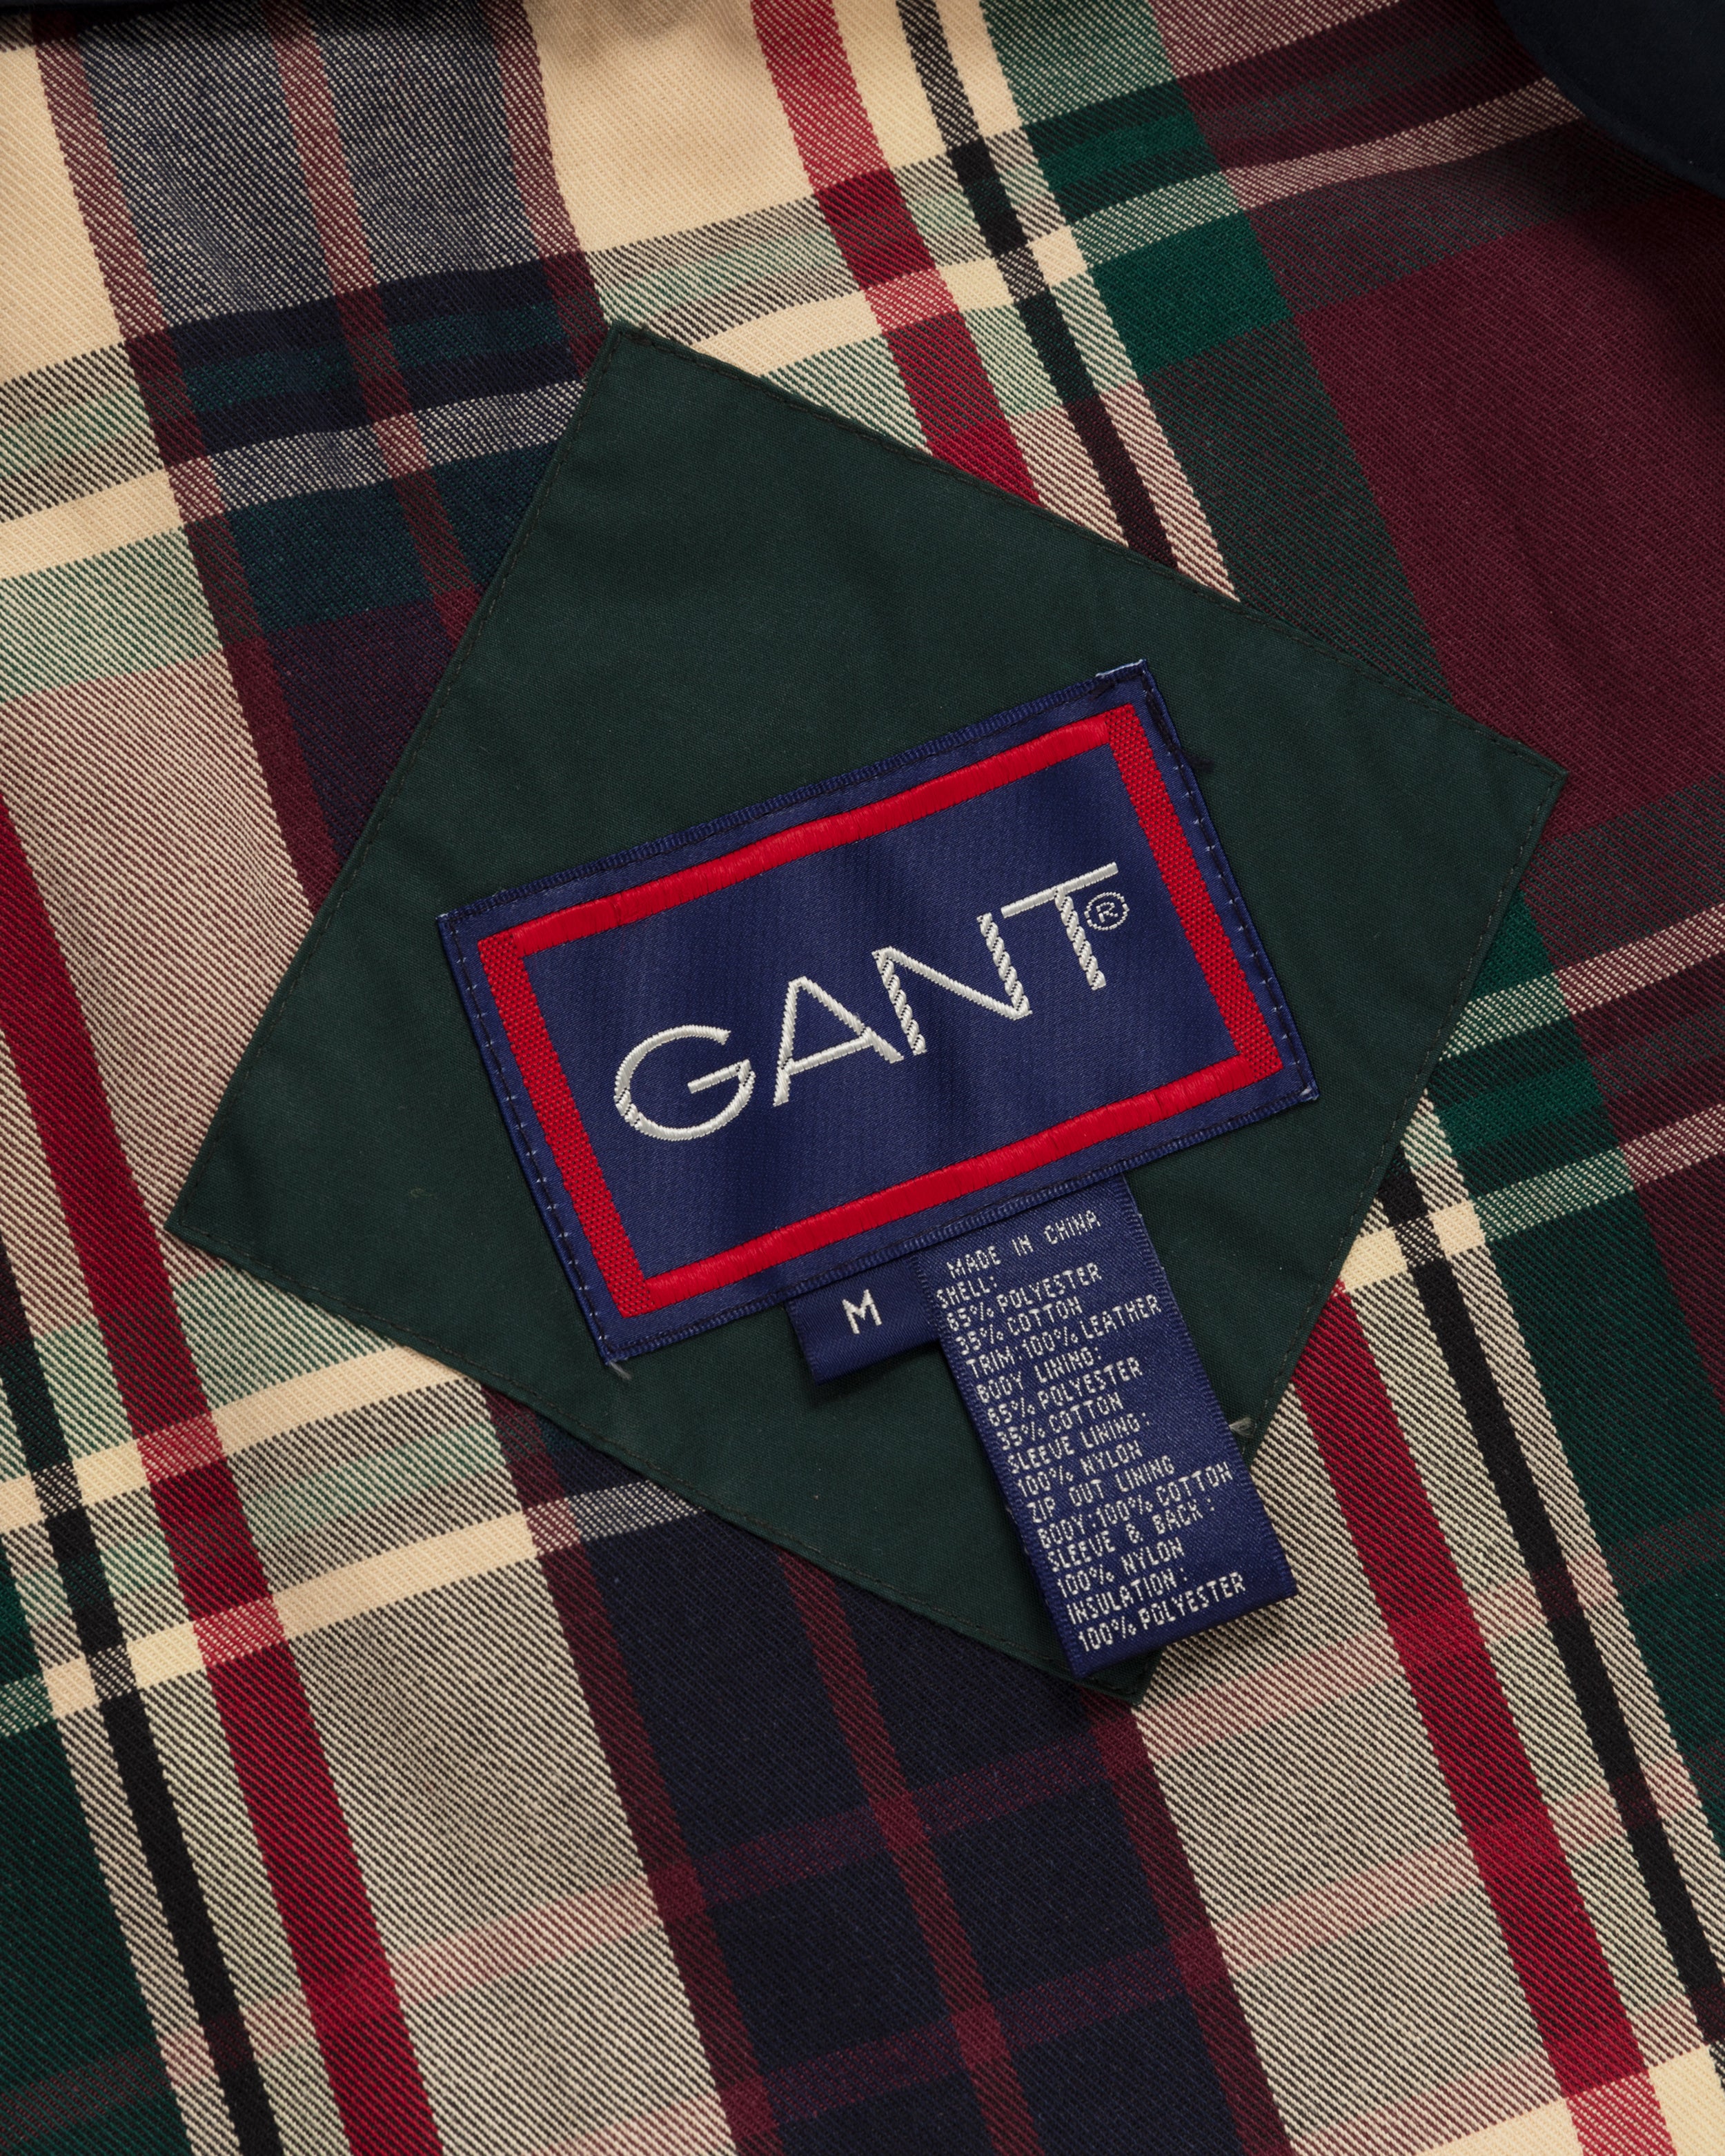 Gant Leather Trim Jacket